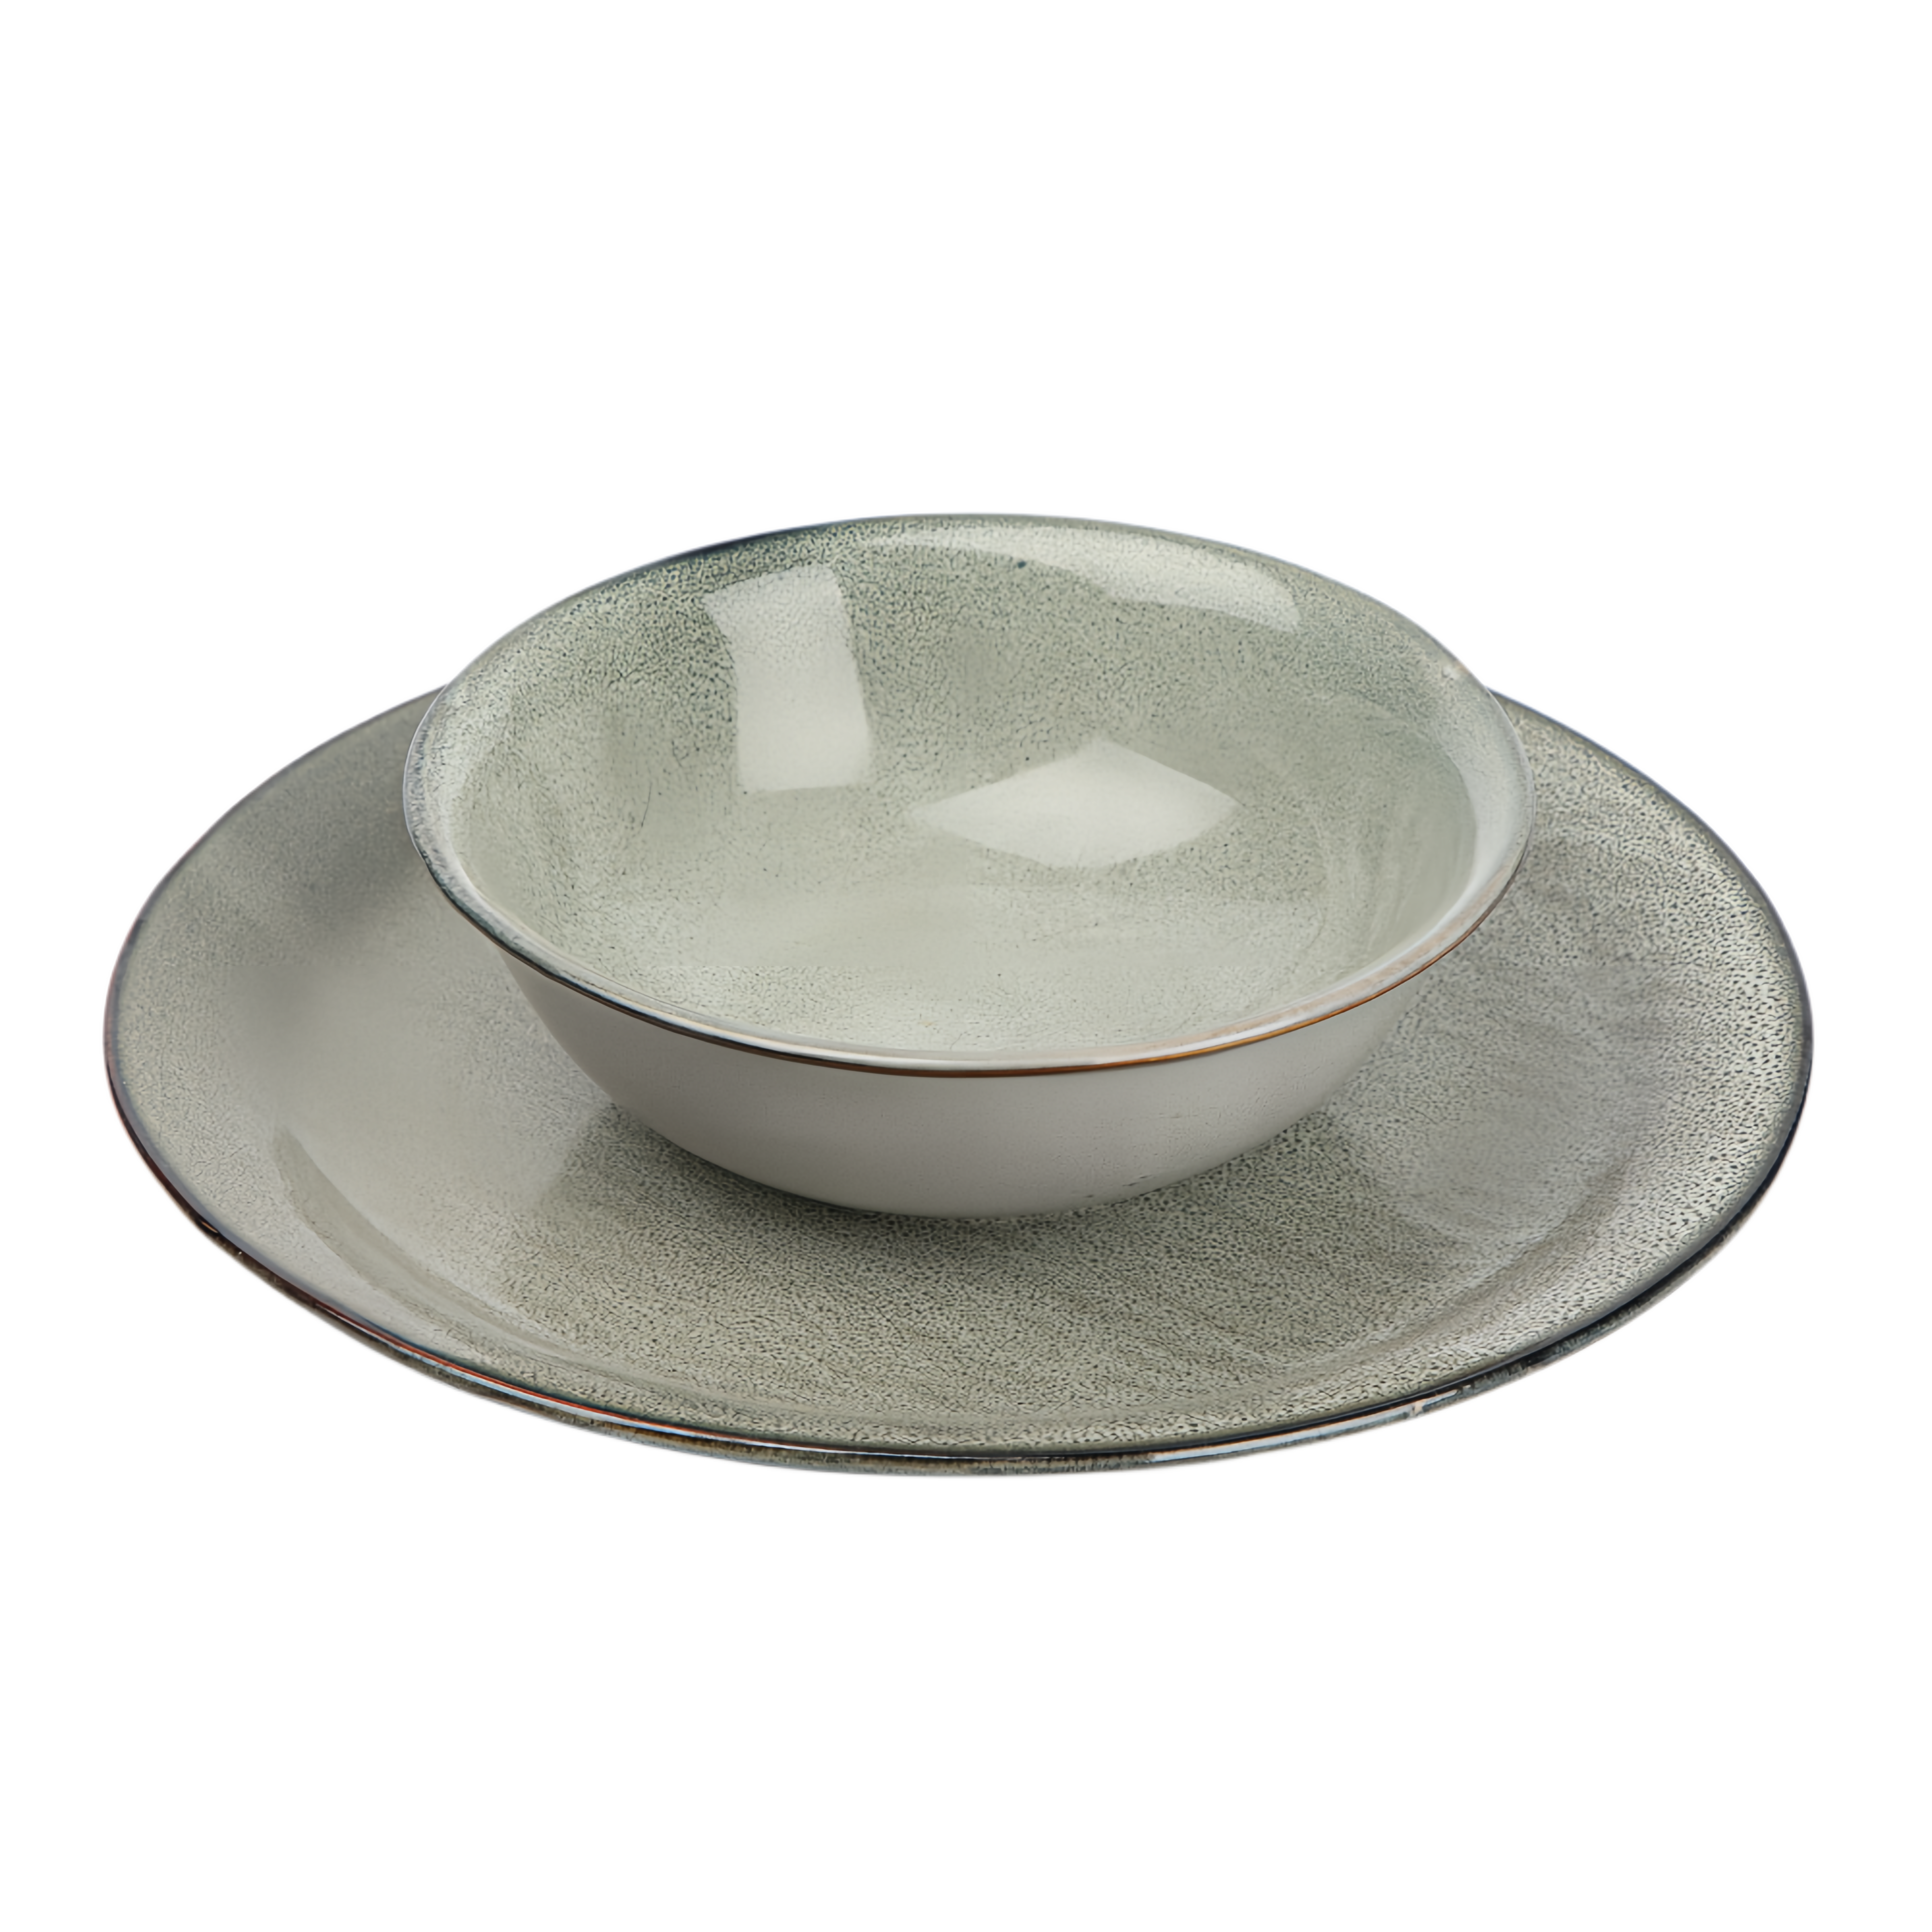 qinge Retro Ceramic Bowl and Plate Set - Two Pieces